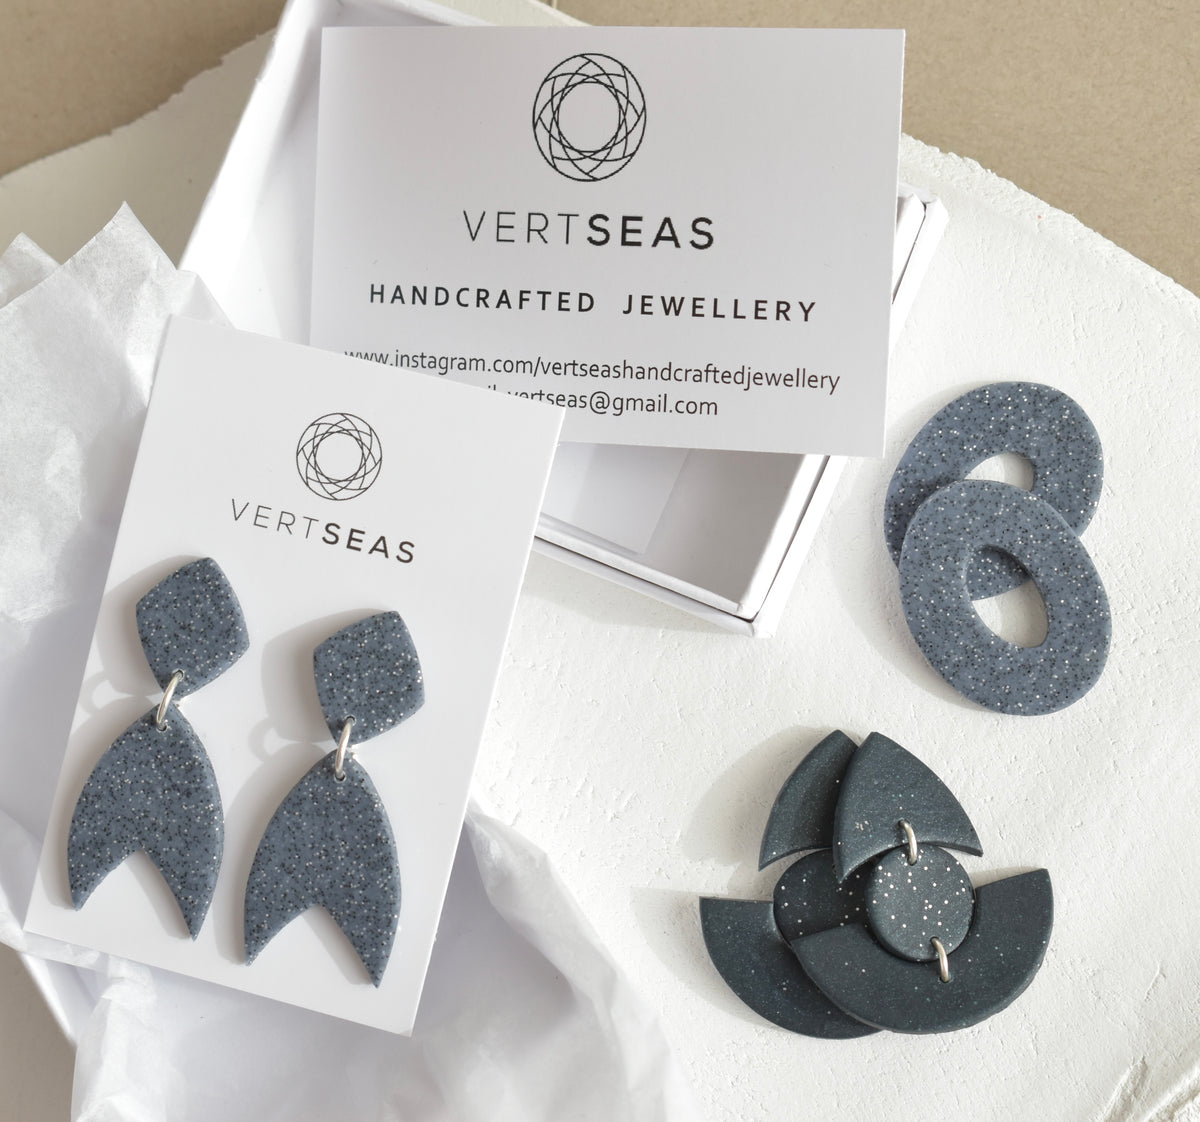 Contemporary Statement Earrings in display handmade by Vertseas Handcrafted Jewellery